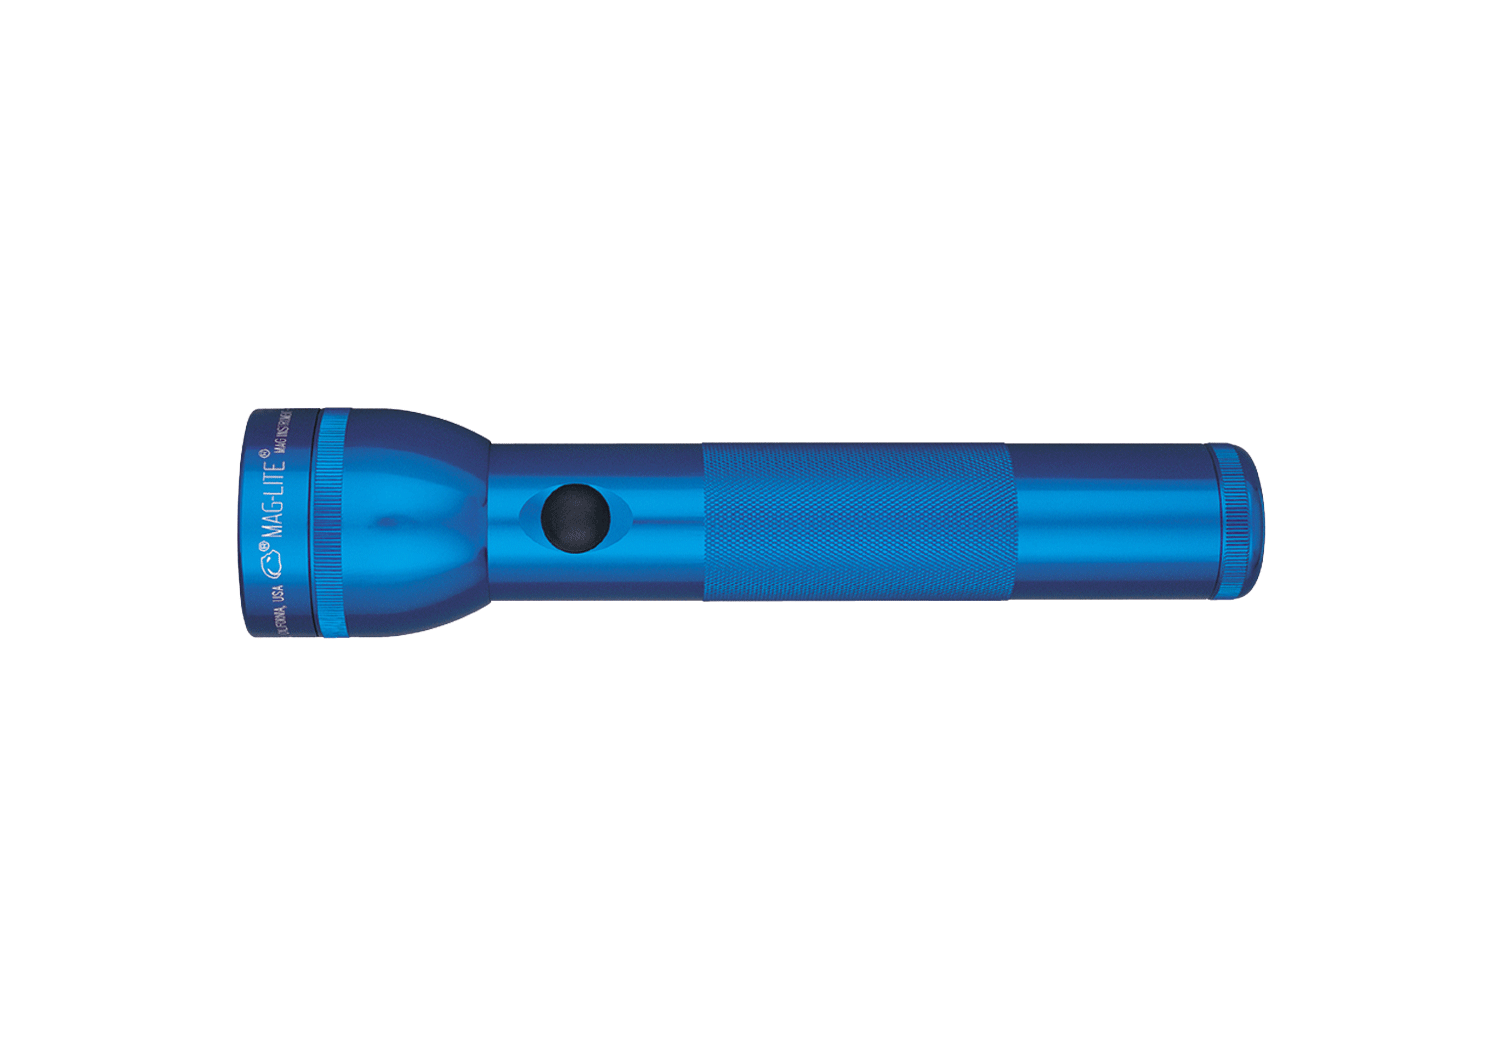 Maglite 2 D Cell LED Flashlight - Blue Body